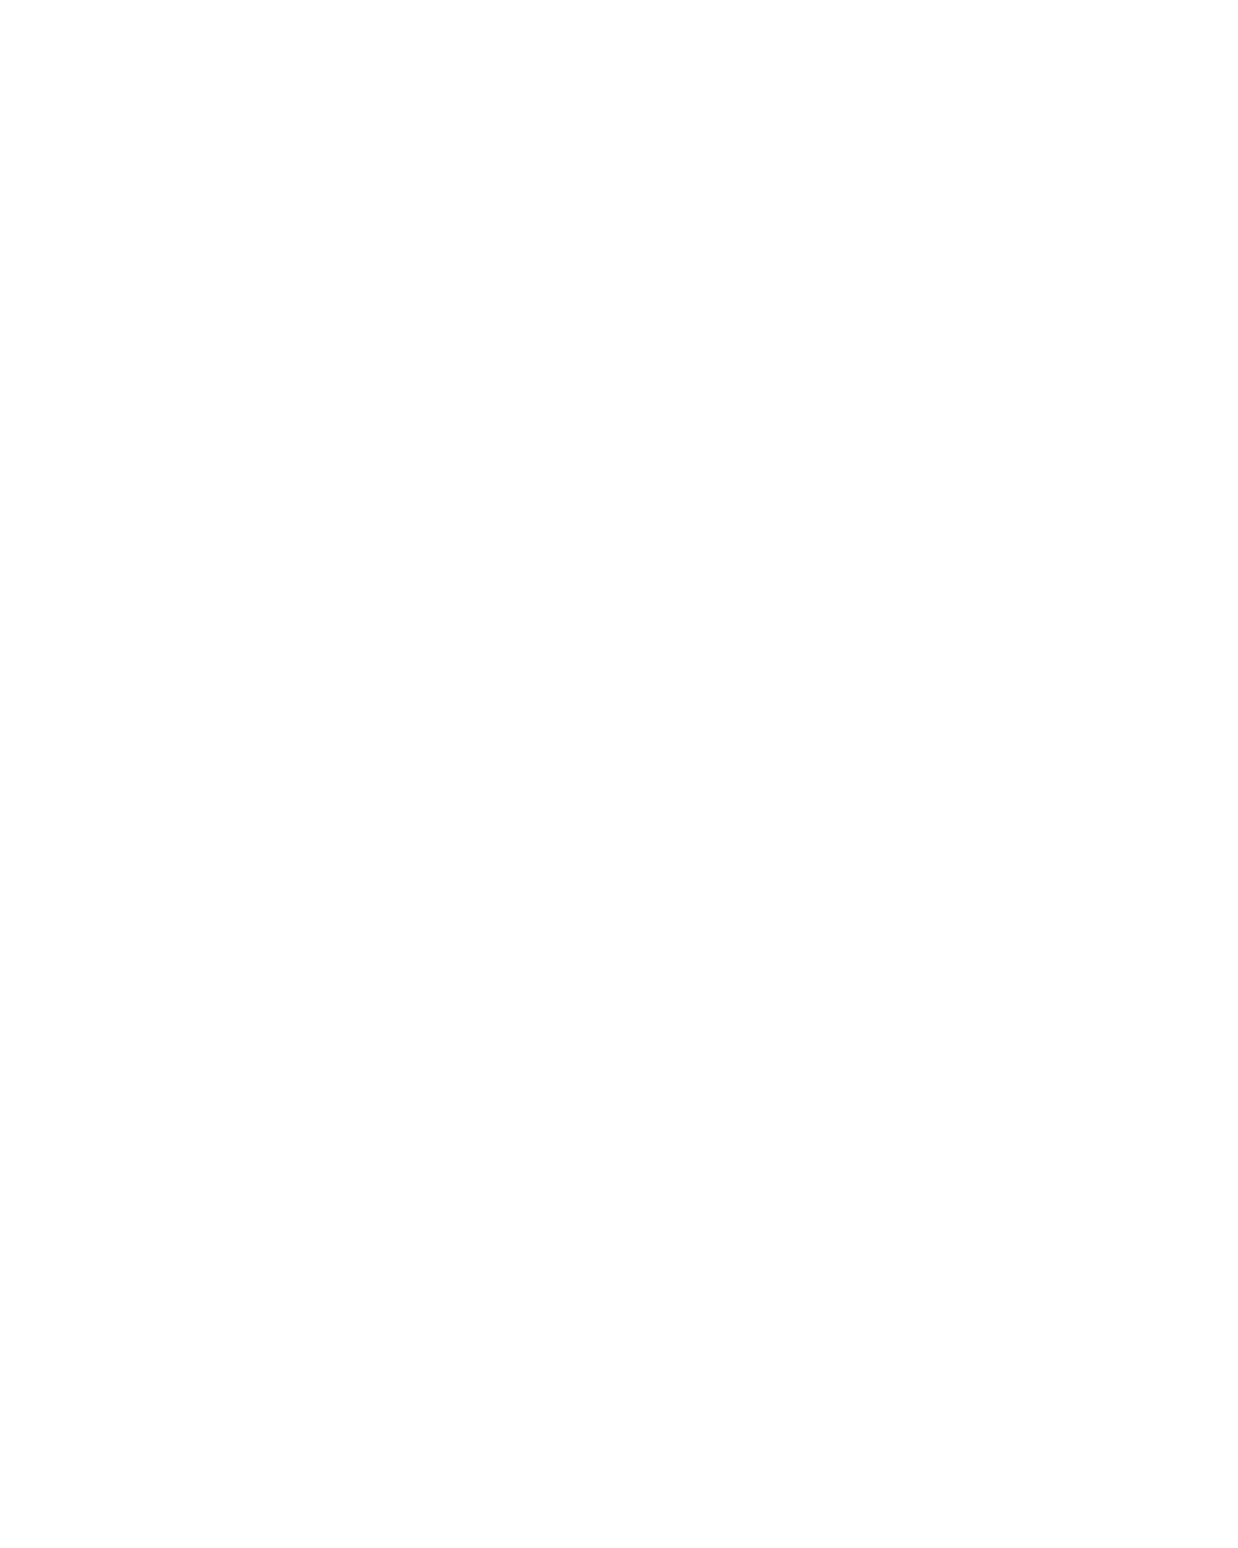 Hargreaves Lansdown logo for dark backgrounds (transparent PNG)